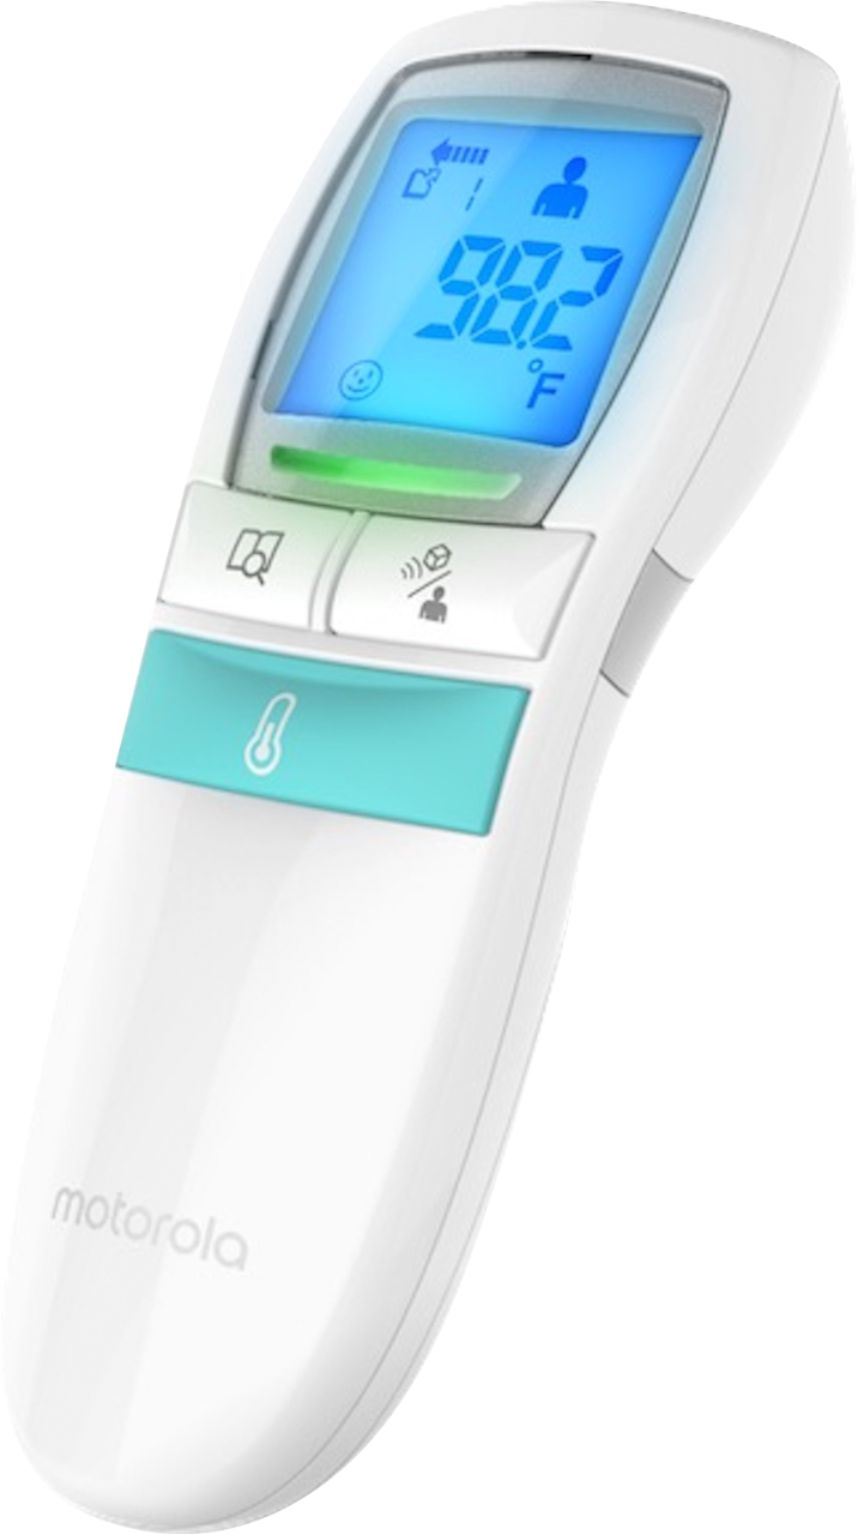 Angle View: Motorola - Care Thermometer - White